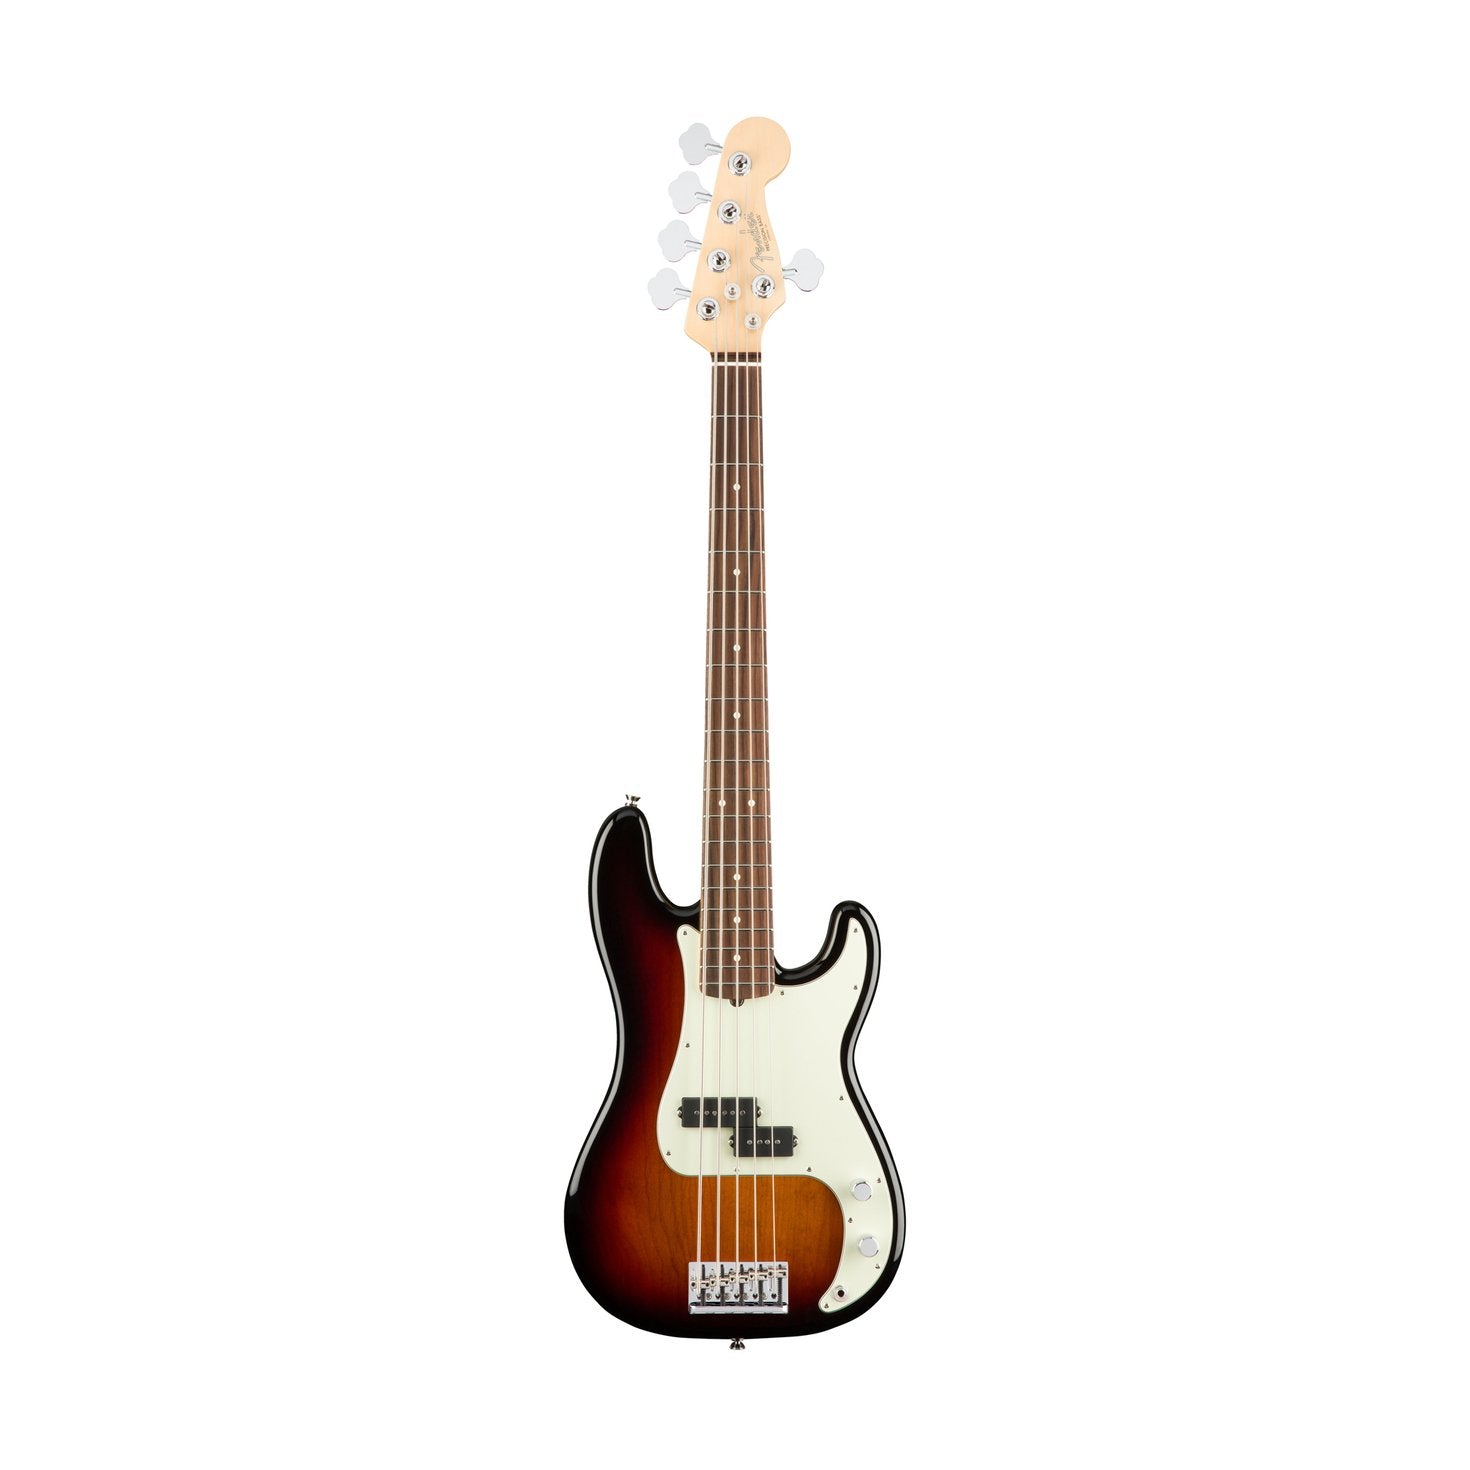 Fender American Professional 5-String Precision Bass Guitar, Rosewood FB, 3-Tone Sunburst, FENDER, BASS GUITAR, fender-bass-guitar-f03-019-4650-700, ZOSO MUSIC SDN BHD